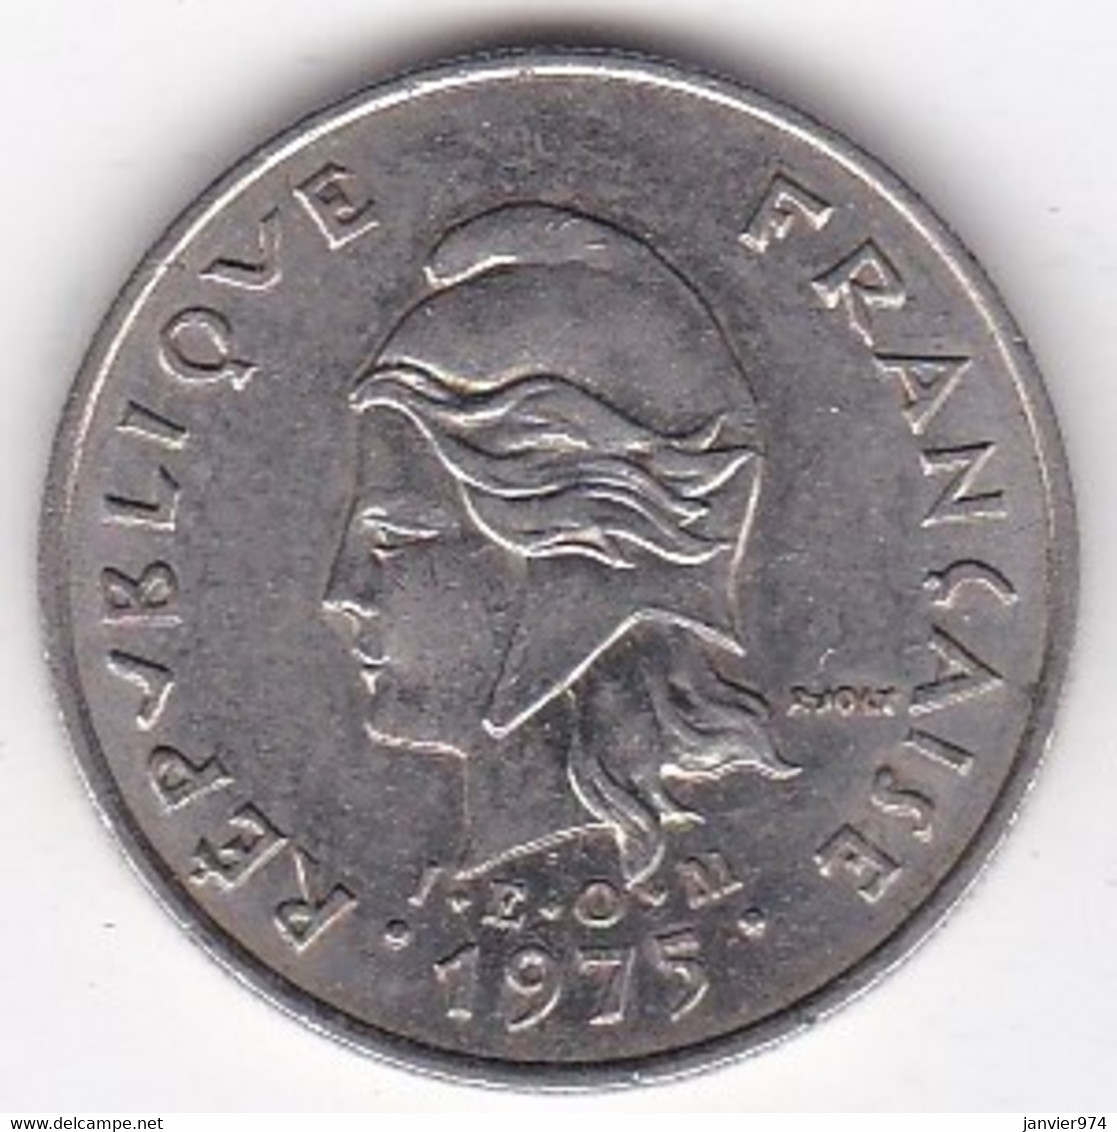 Polynésie Française. 10 Francs 1975 . En Nickel - French Polynesia